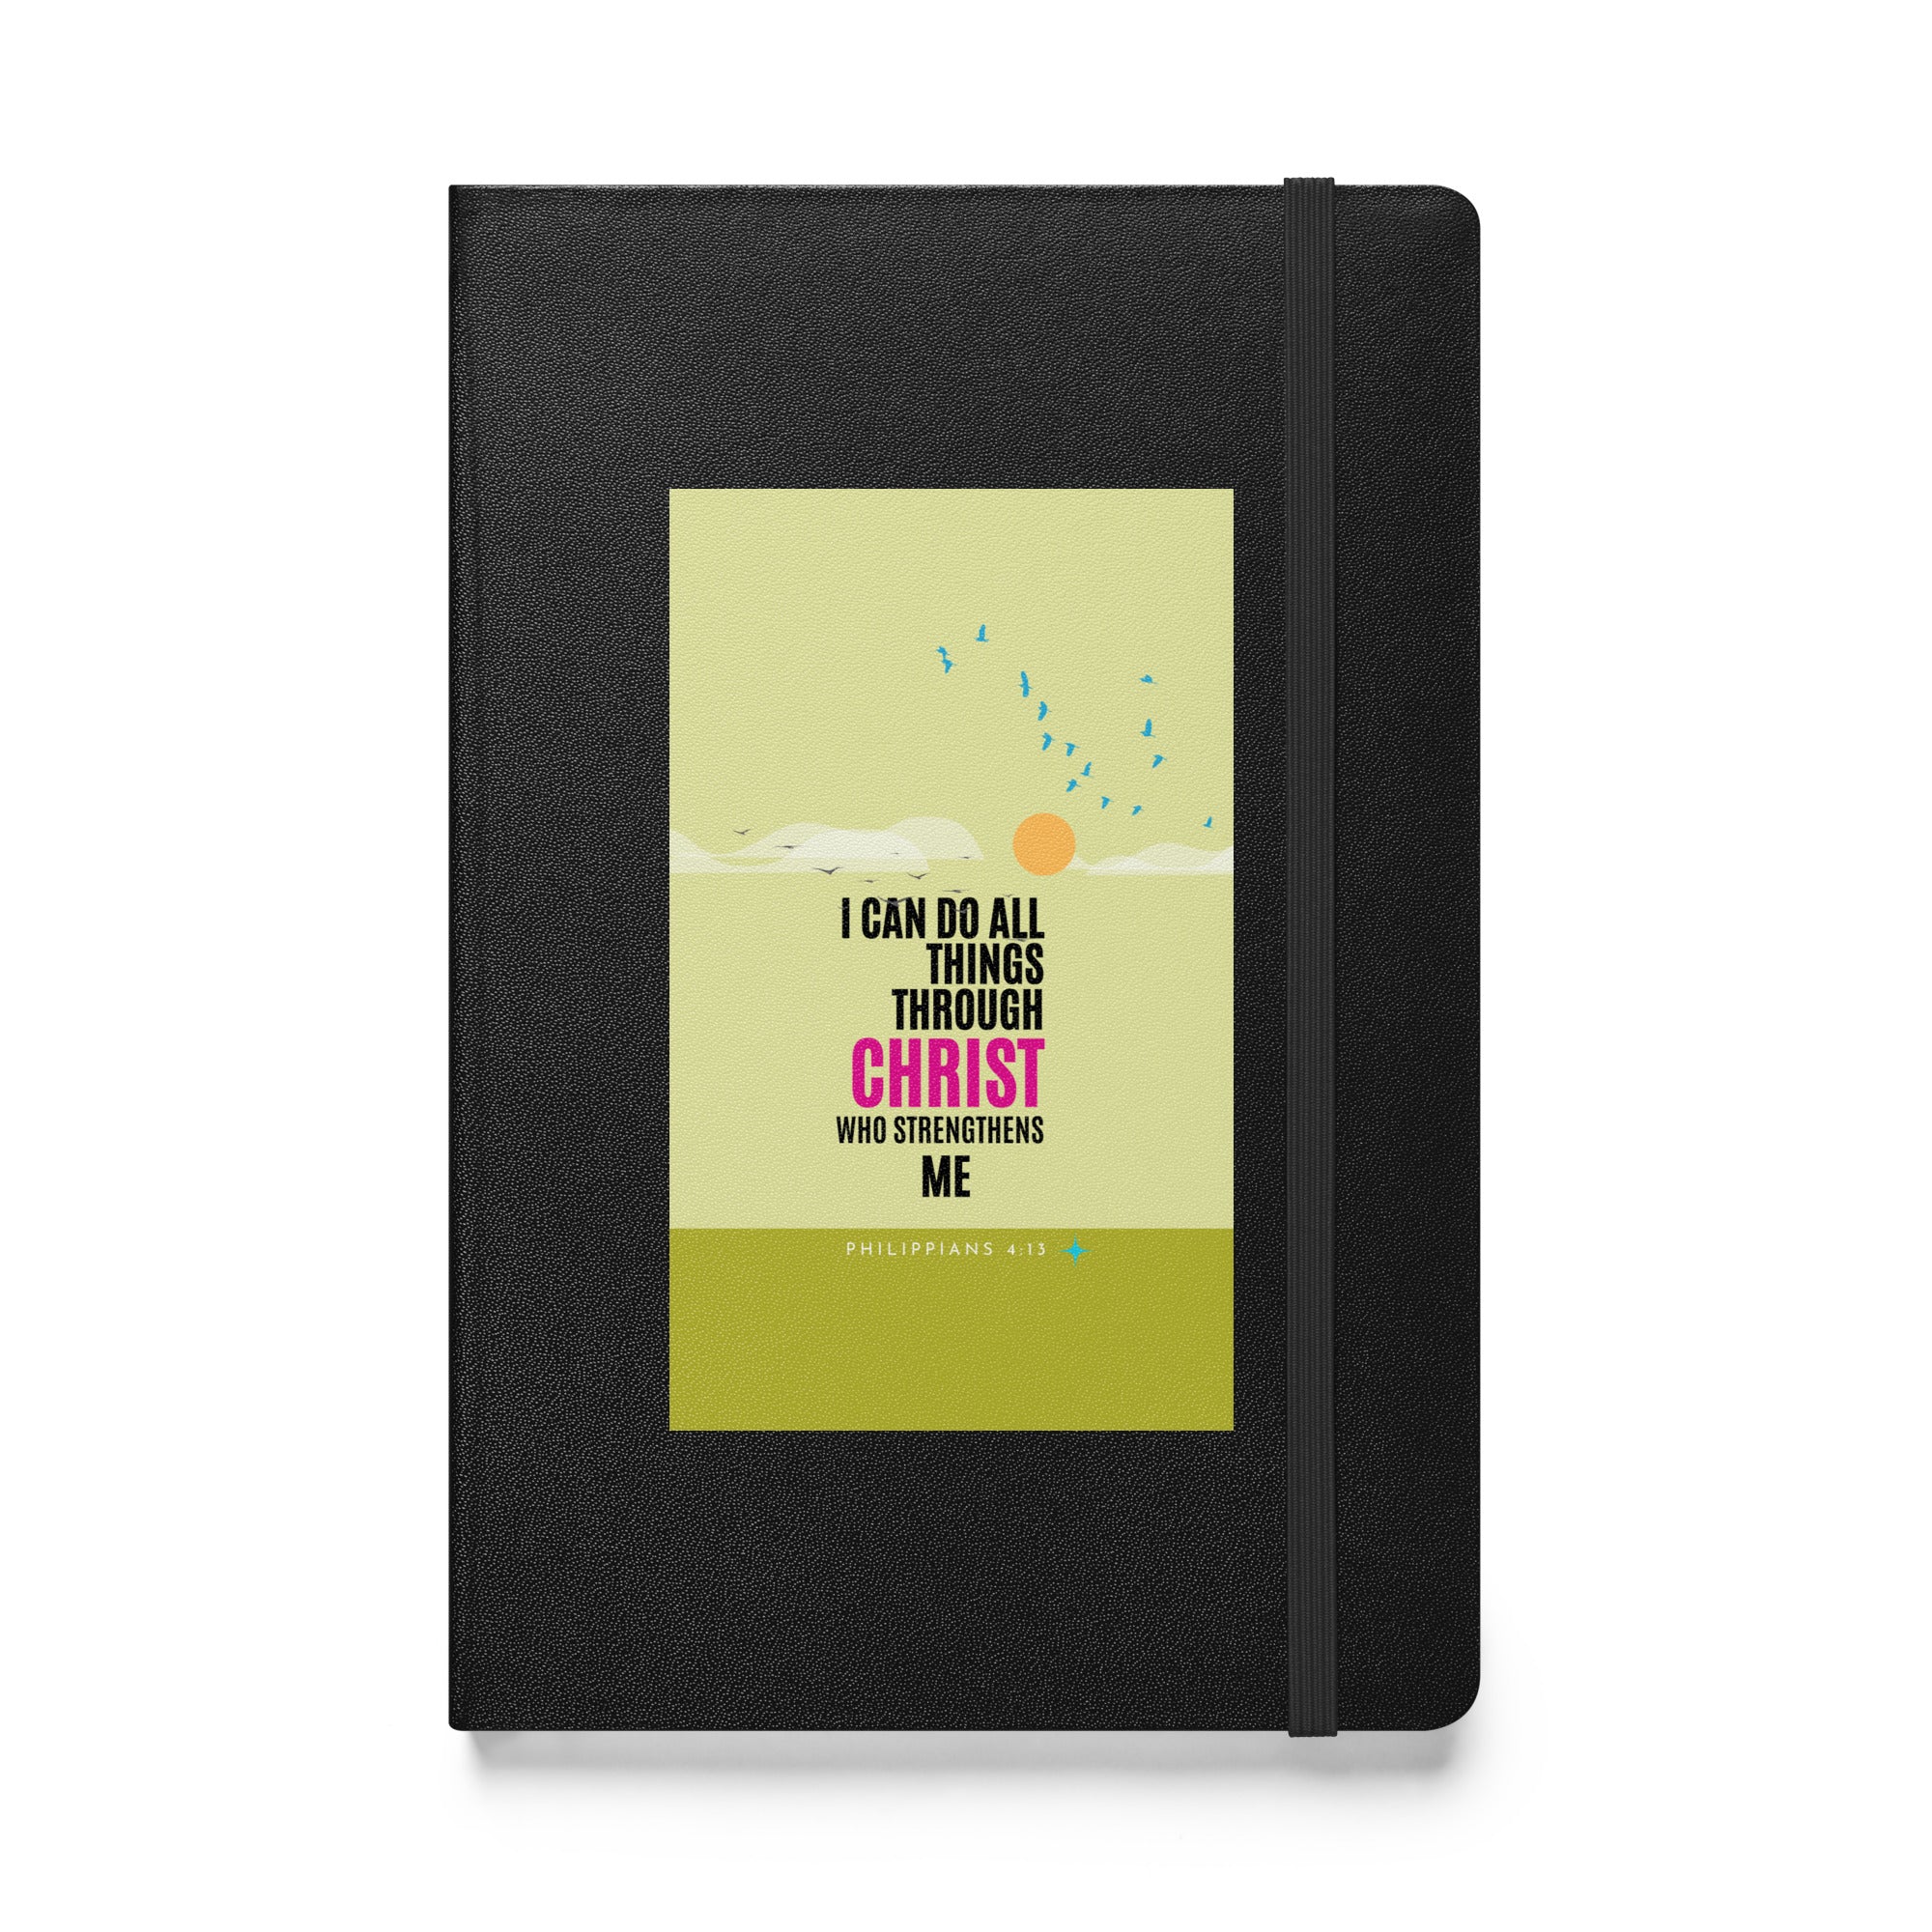 Hardcover bound notebook - Philippians 4:13